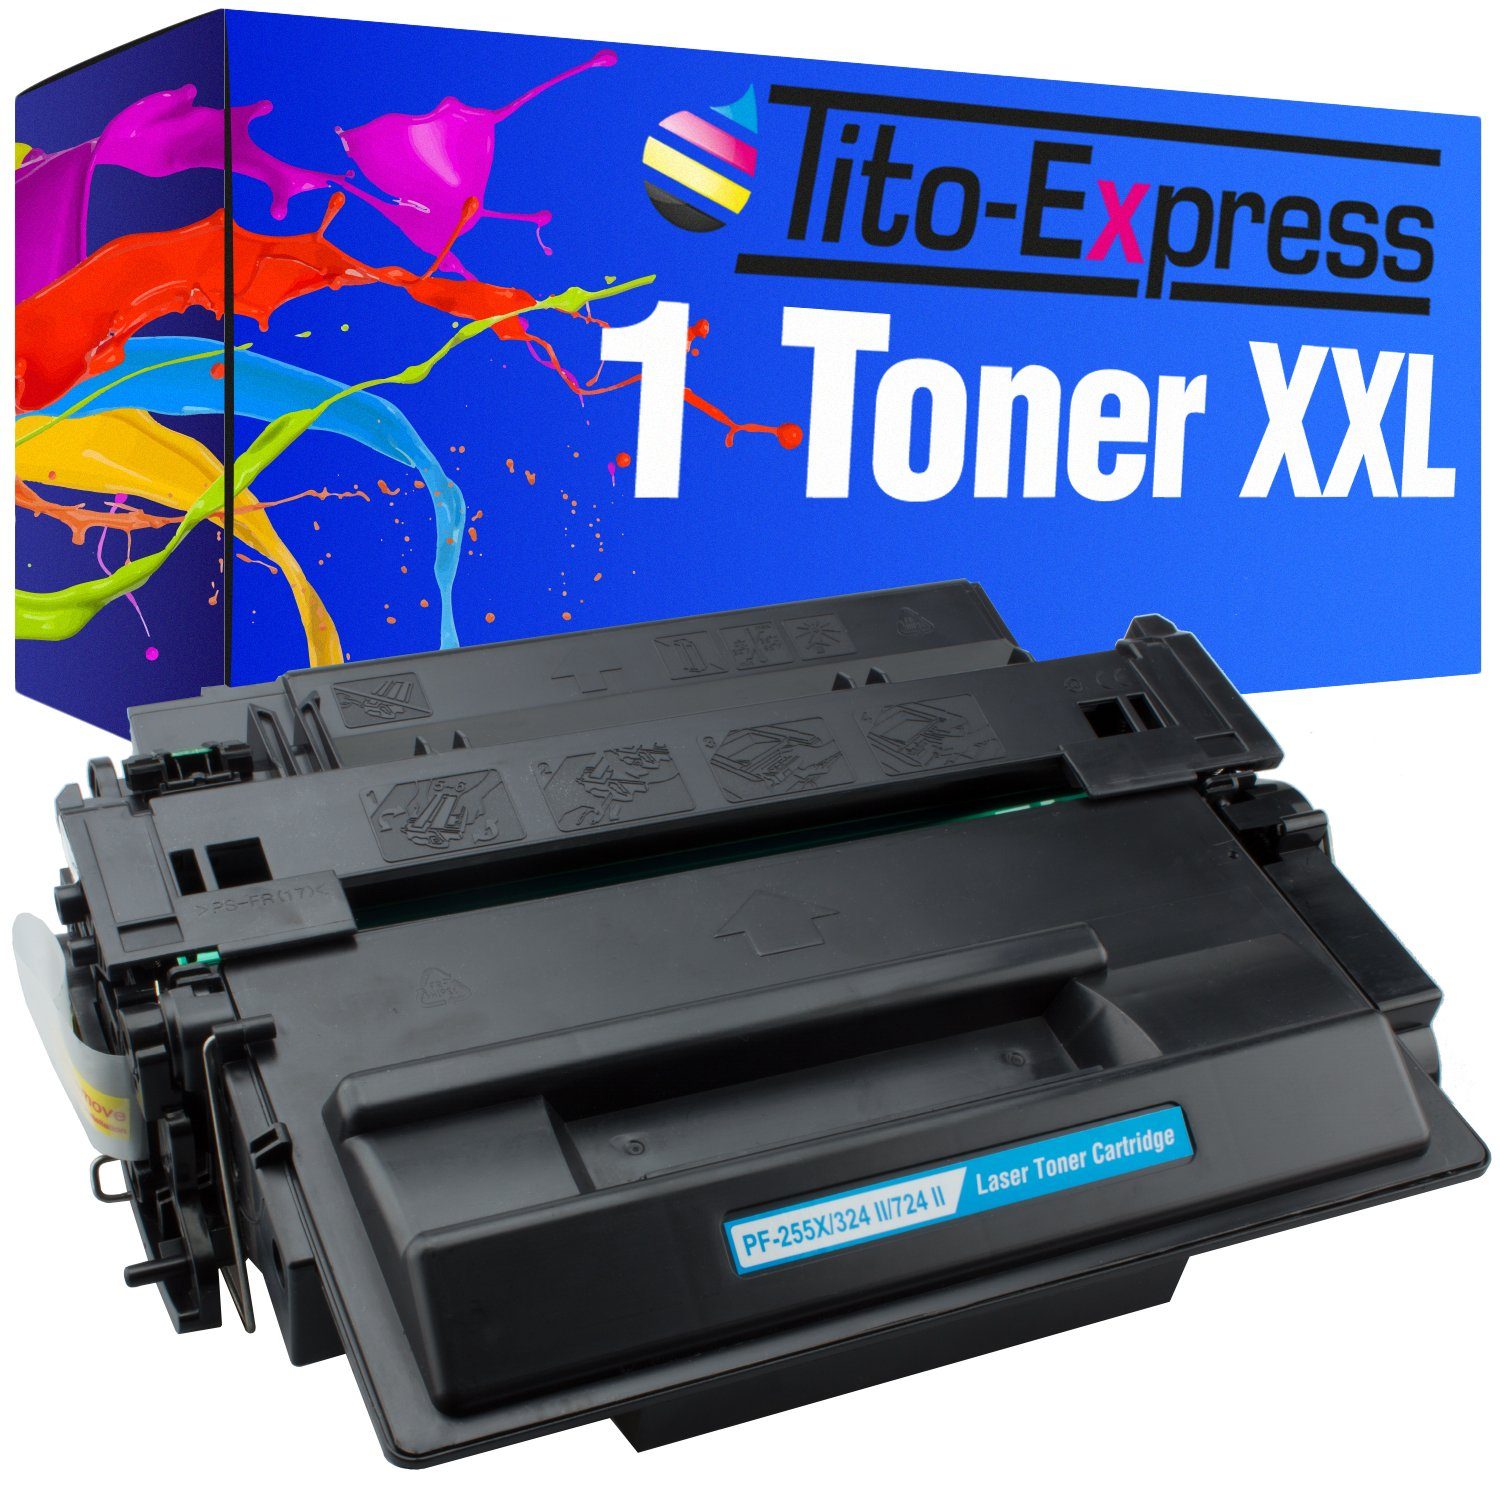 X Tonerpatrone Enterprise Laserjet CE P3015 ersetzt HPCE255X Black, Pro P3010 HP 500 Tito-Express HP MFP MFP für 255X 255 P3011 M521dn M525 CE